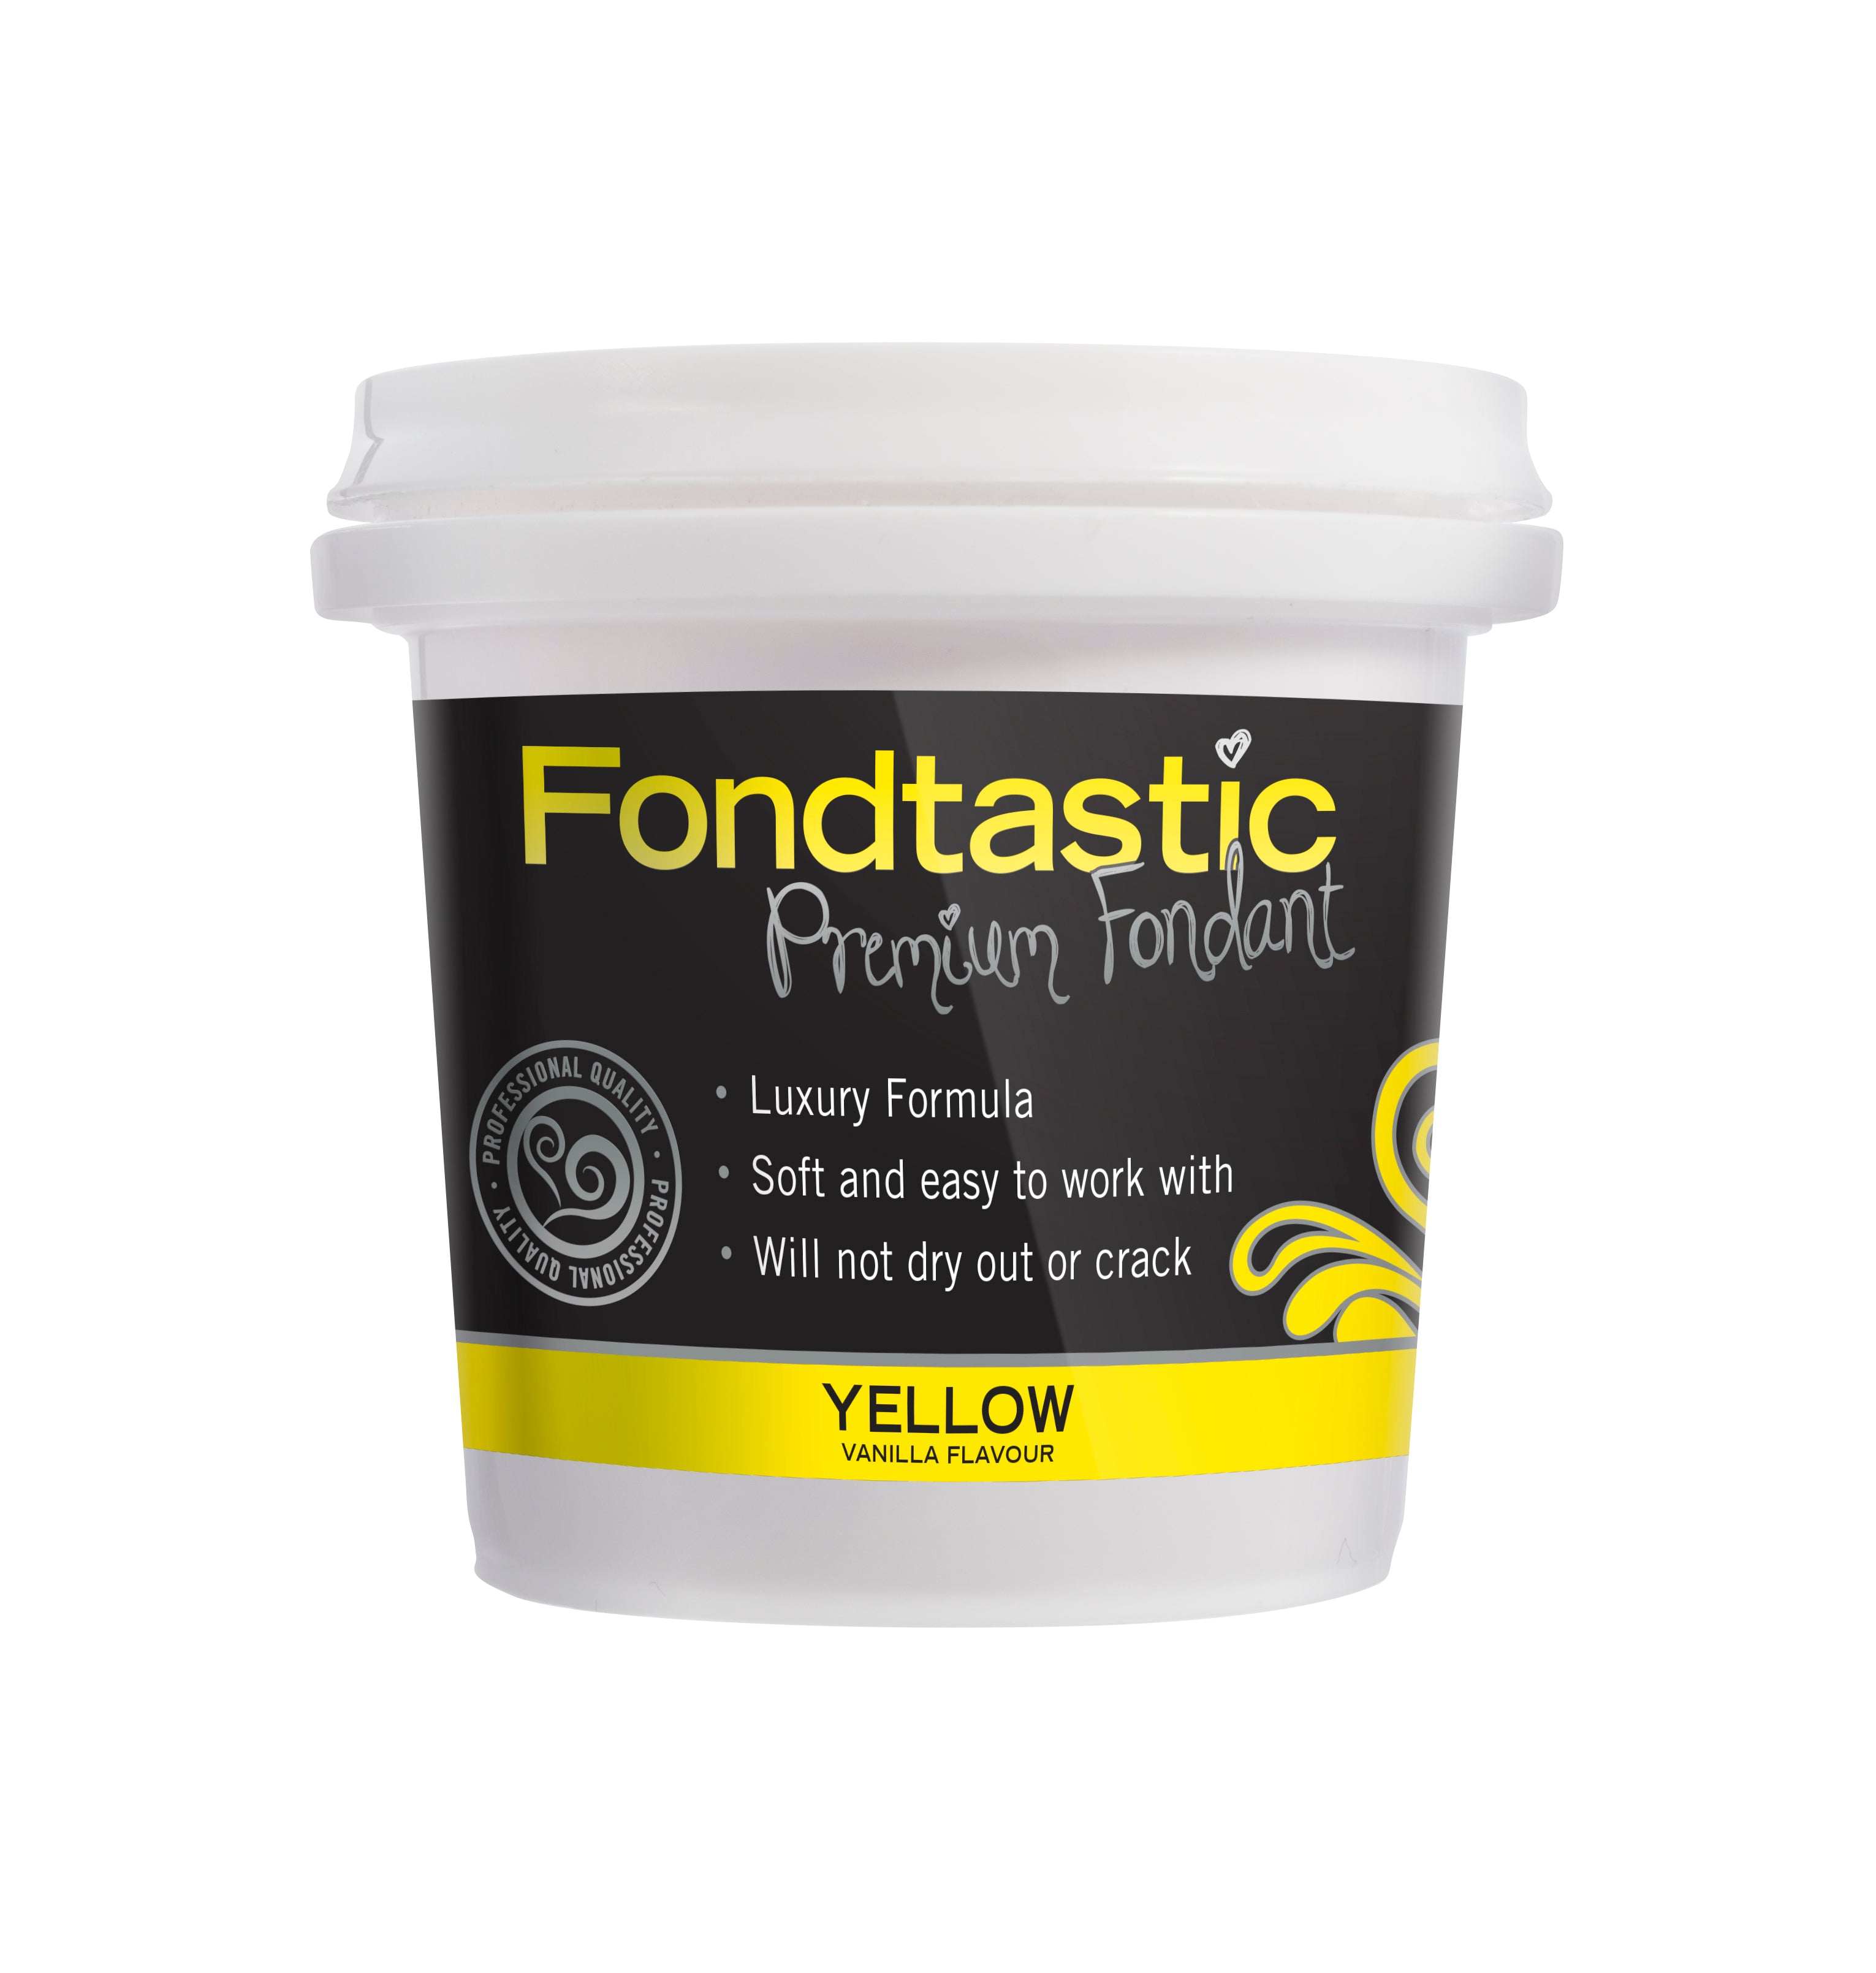 Fondtastic Premium Fondant - Yellow 225g